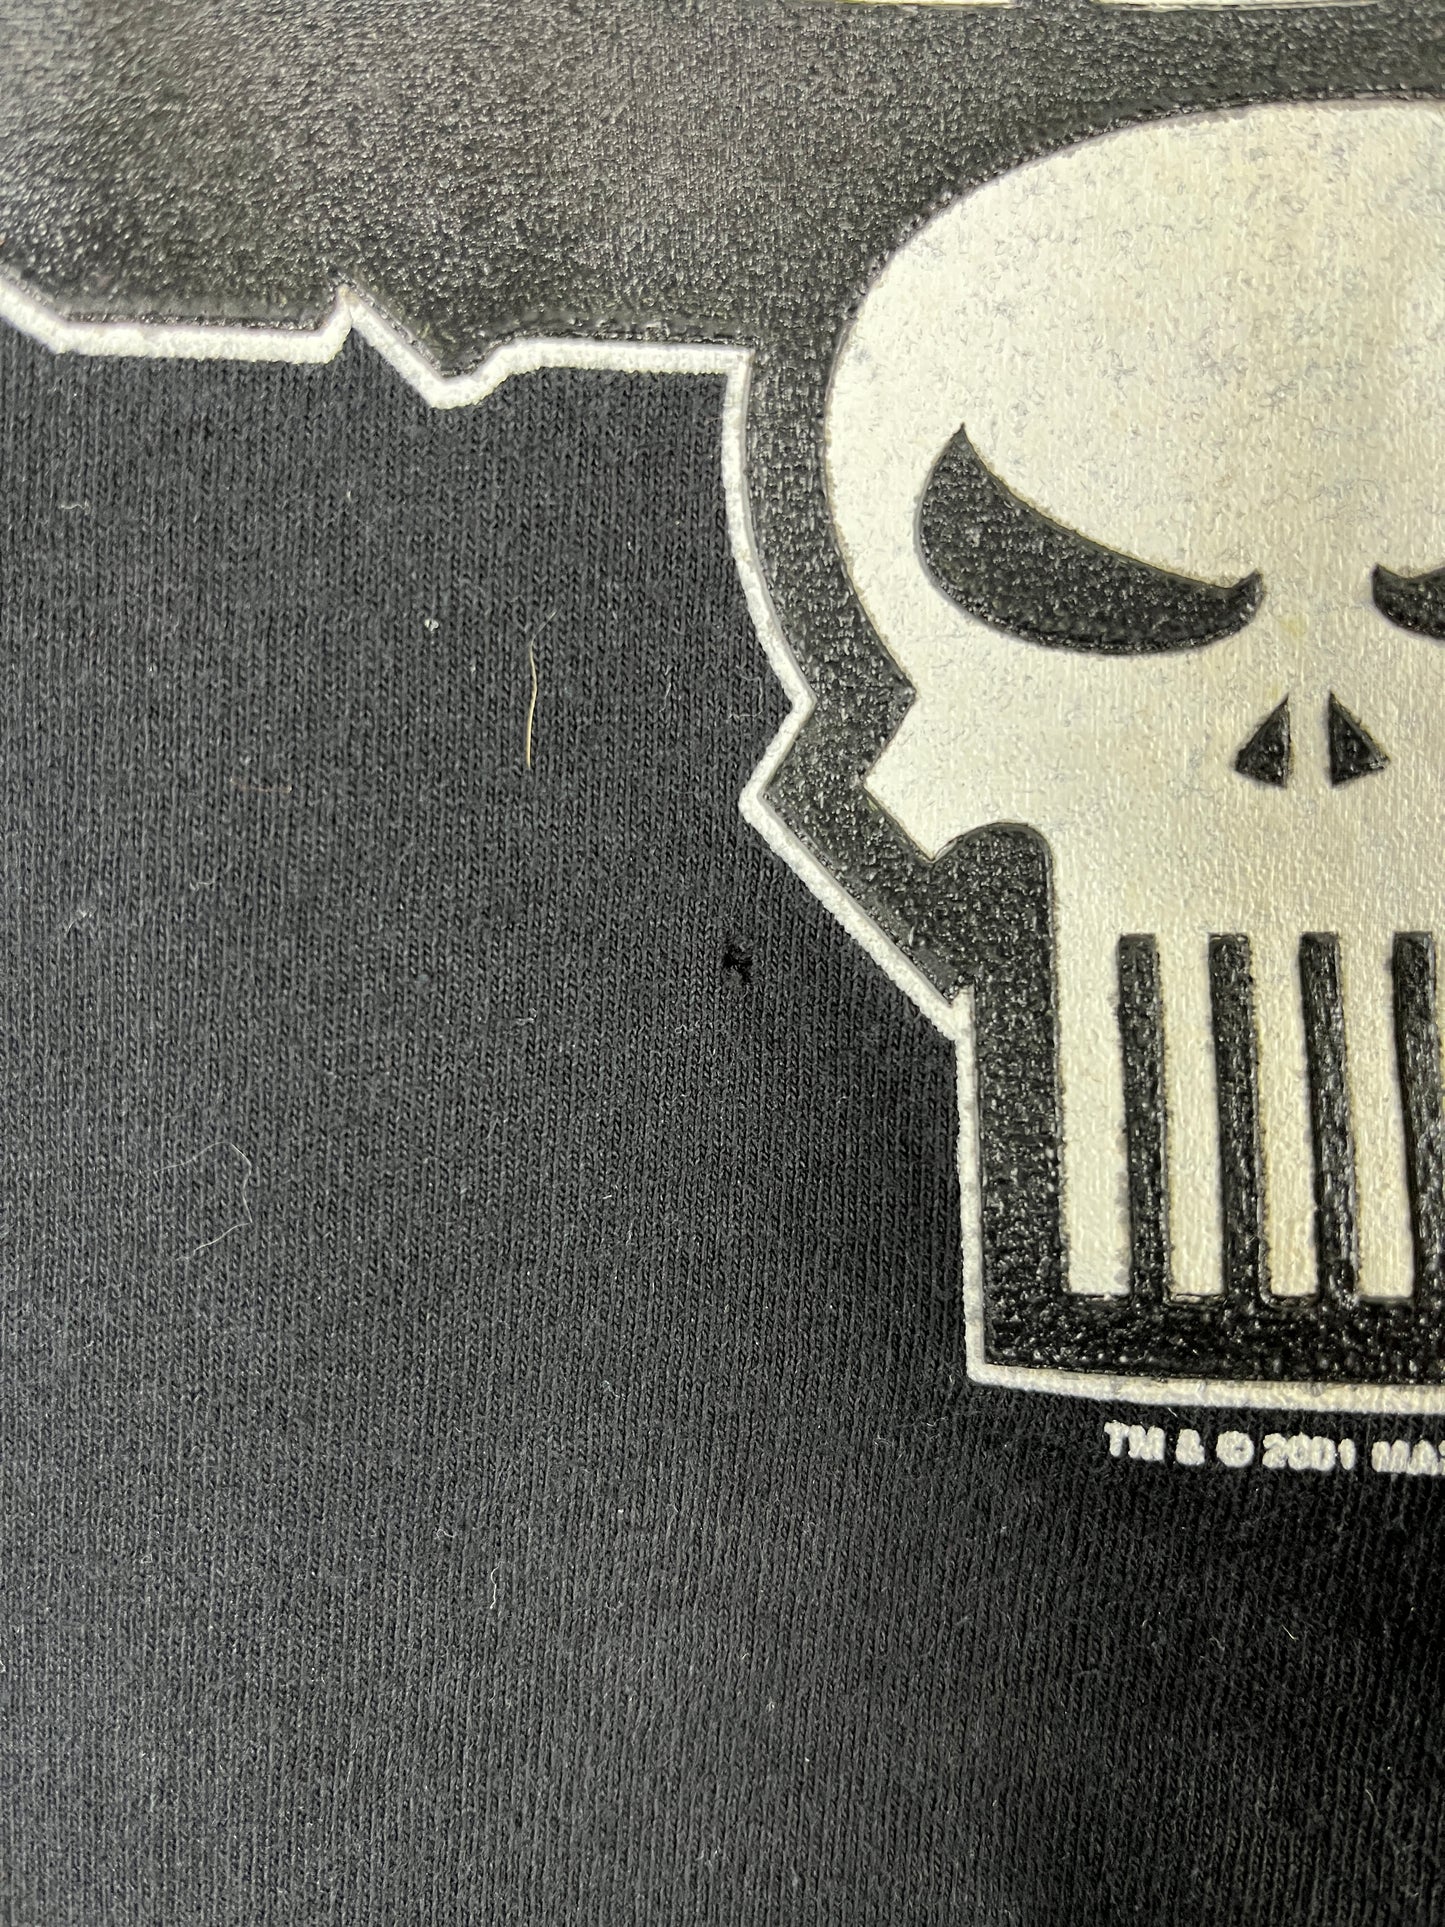 Vintage The Punisher 2001 Comic T-shirt